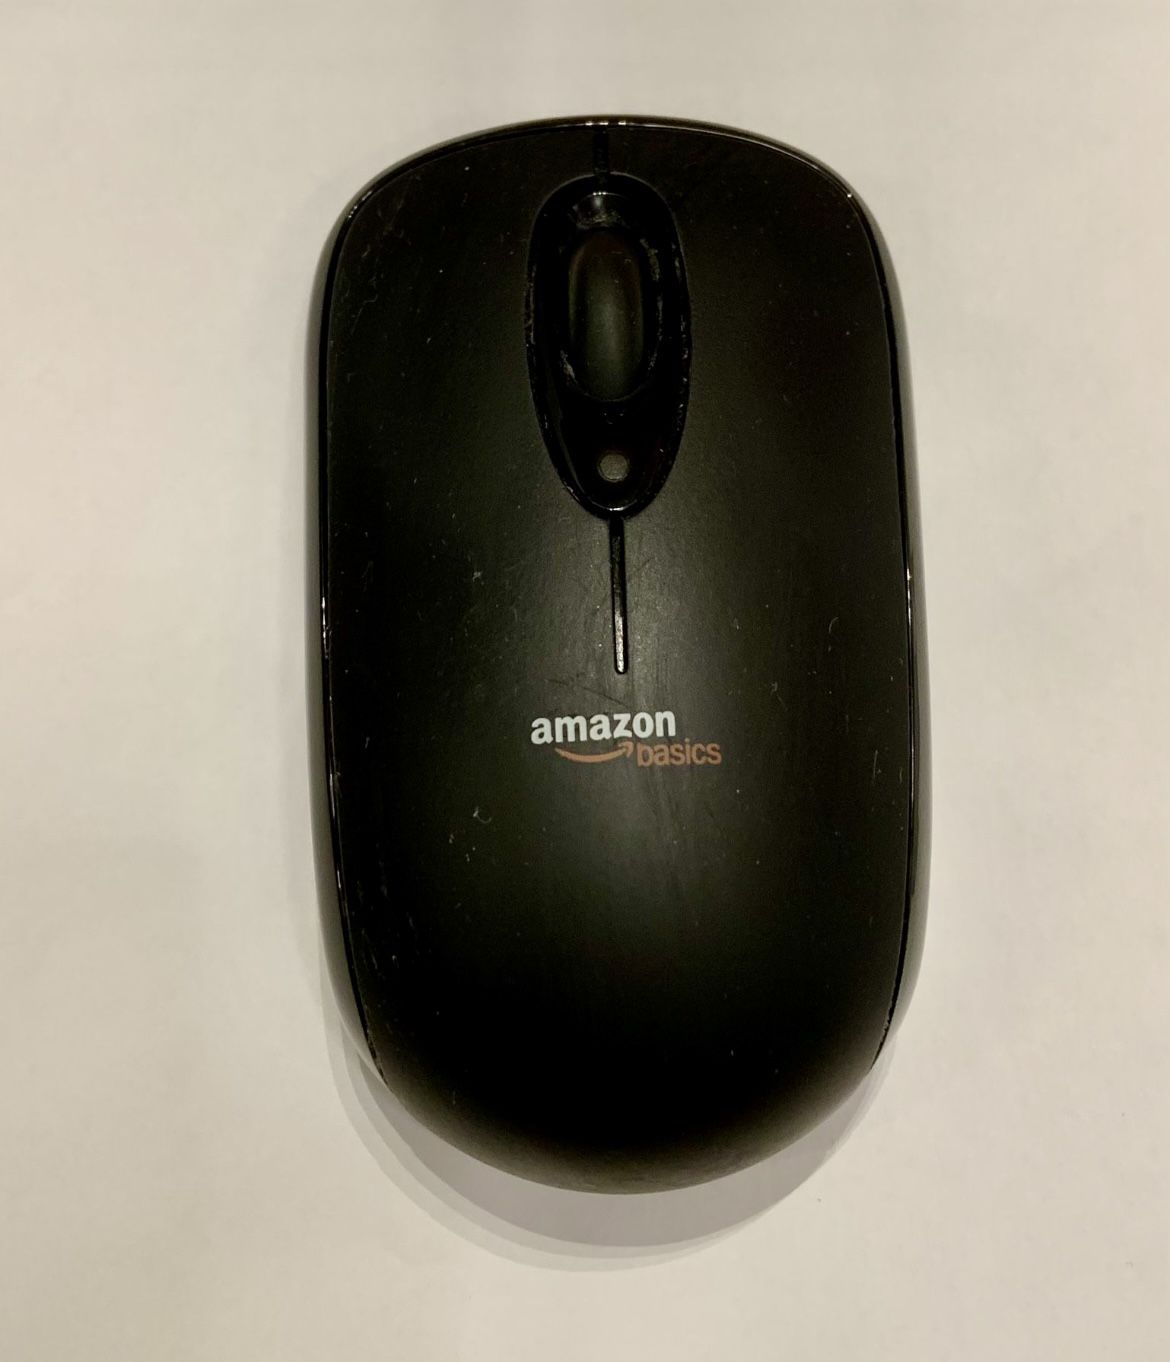 Wireless Optical Computer Mouse with USB Nano Receiver, Amazon, Black